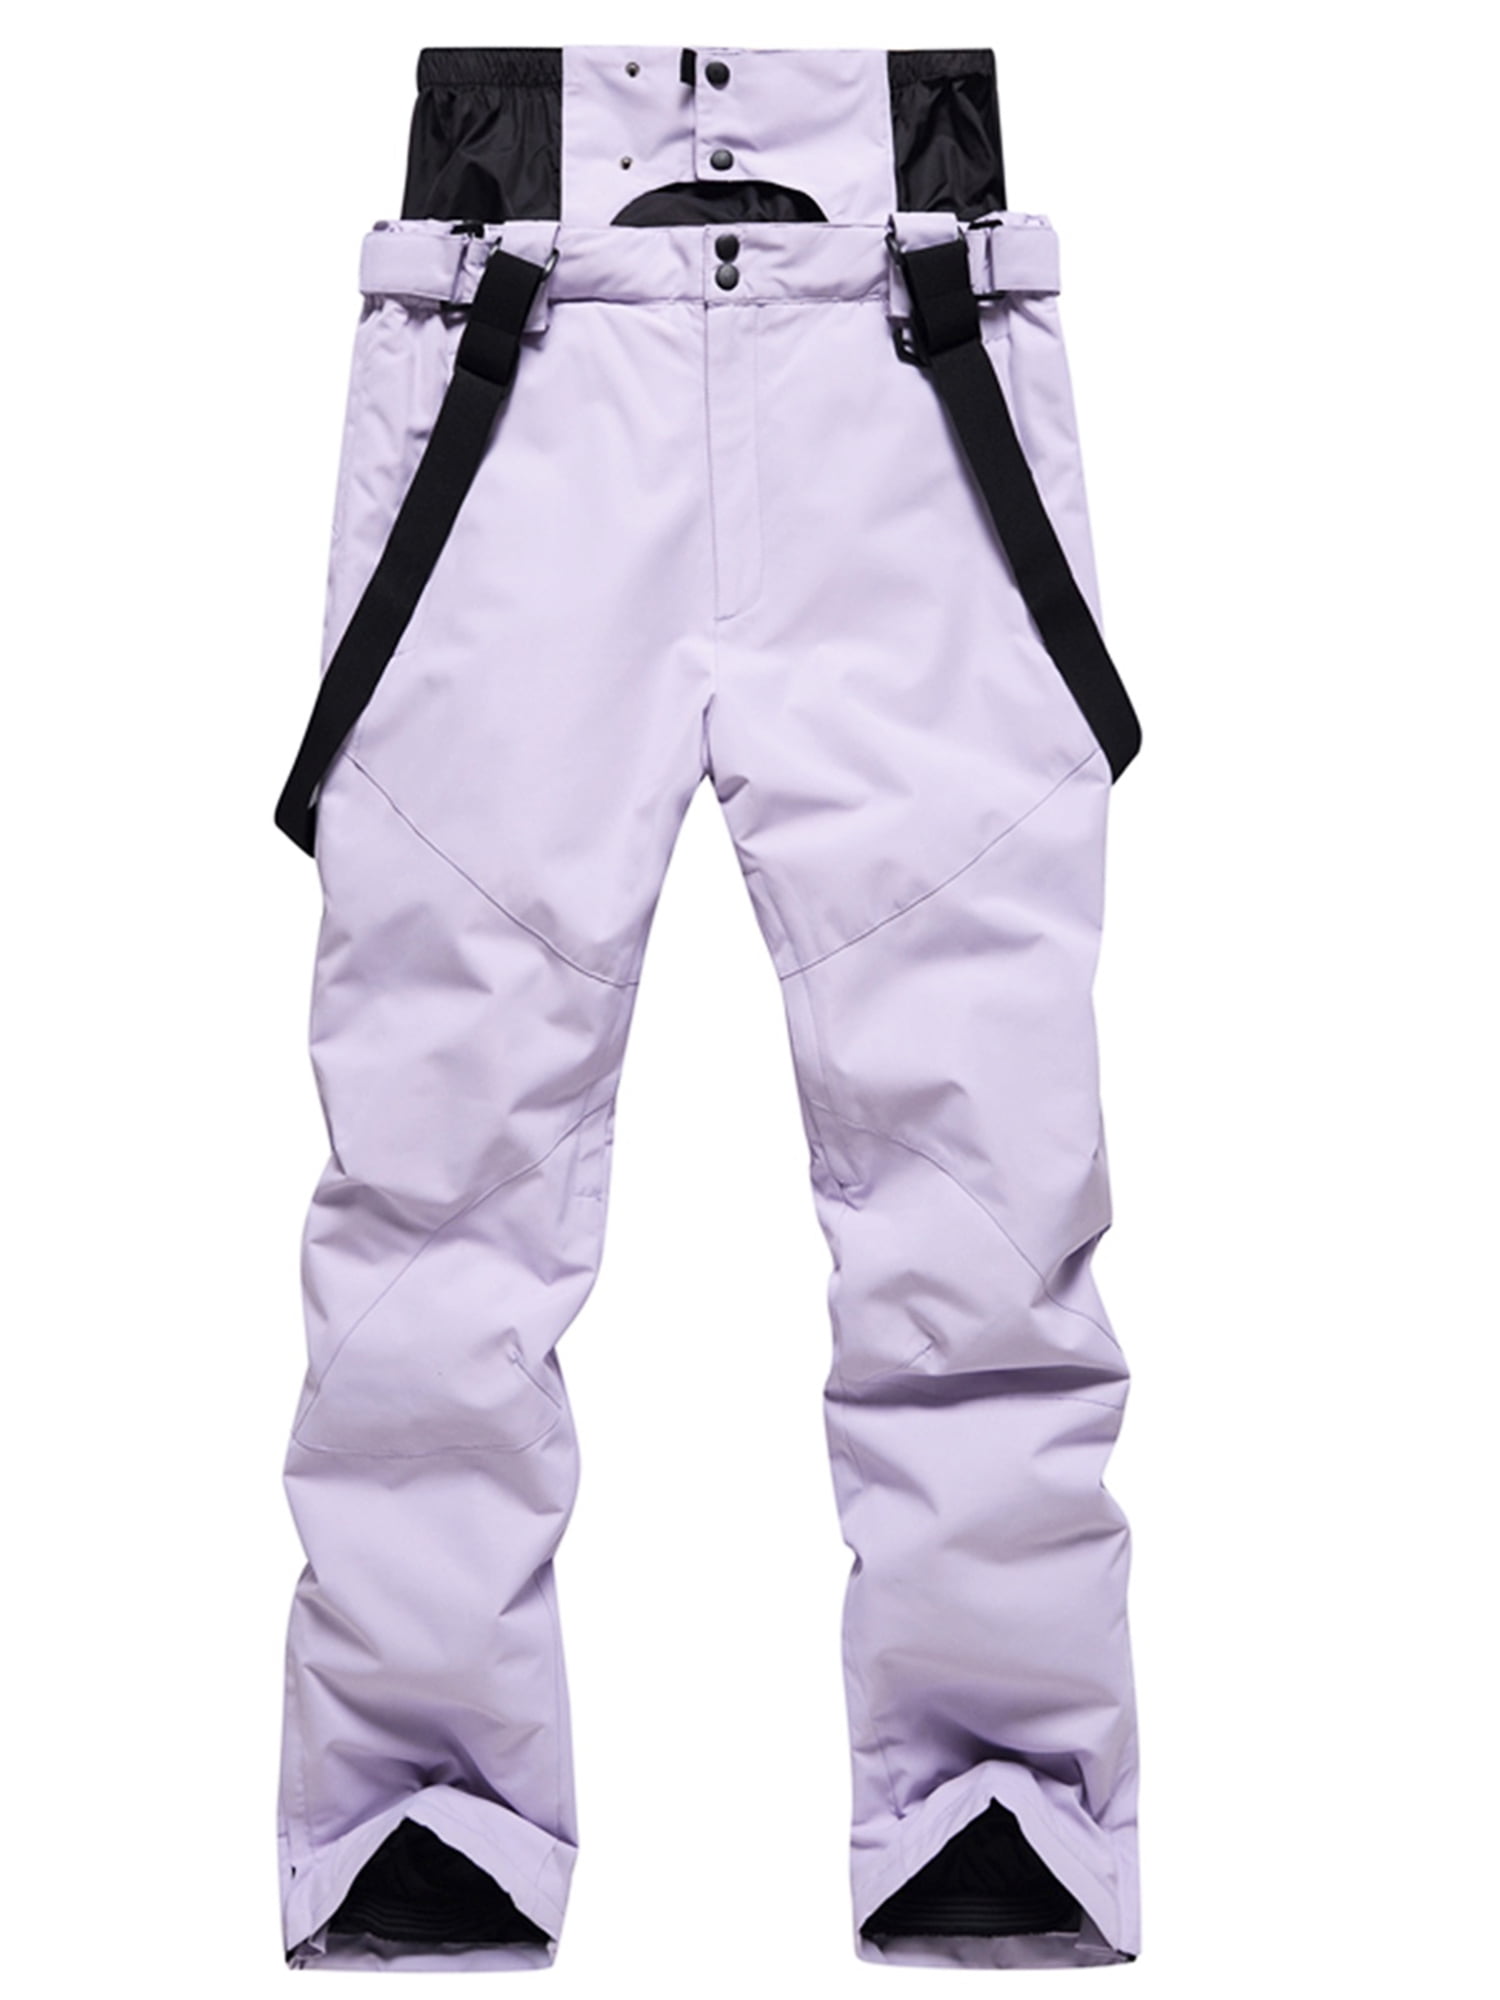 LSFYSZD Women Men Waterproof Ski Pants Softshell Fleece Lined Outdoor  Walking Trousers Warm Thicken Padded Hiking Ski Pants 